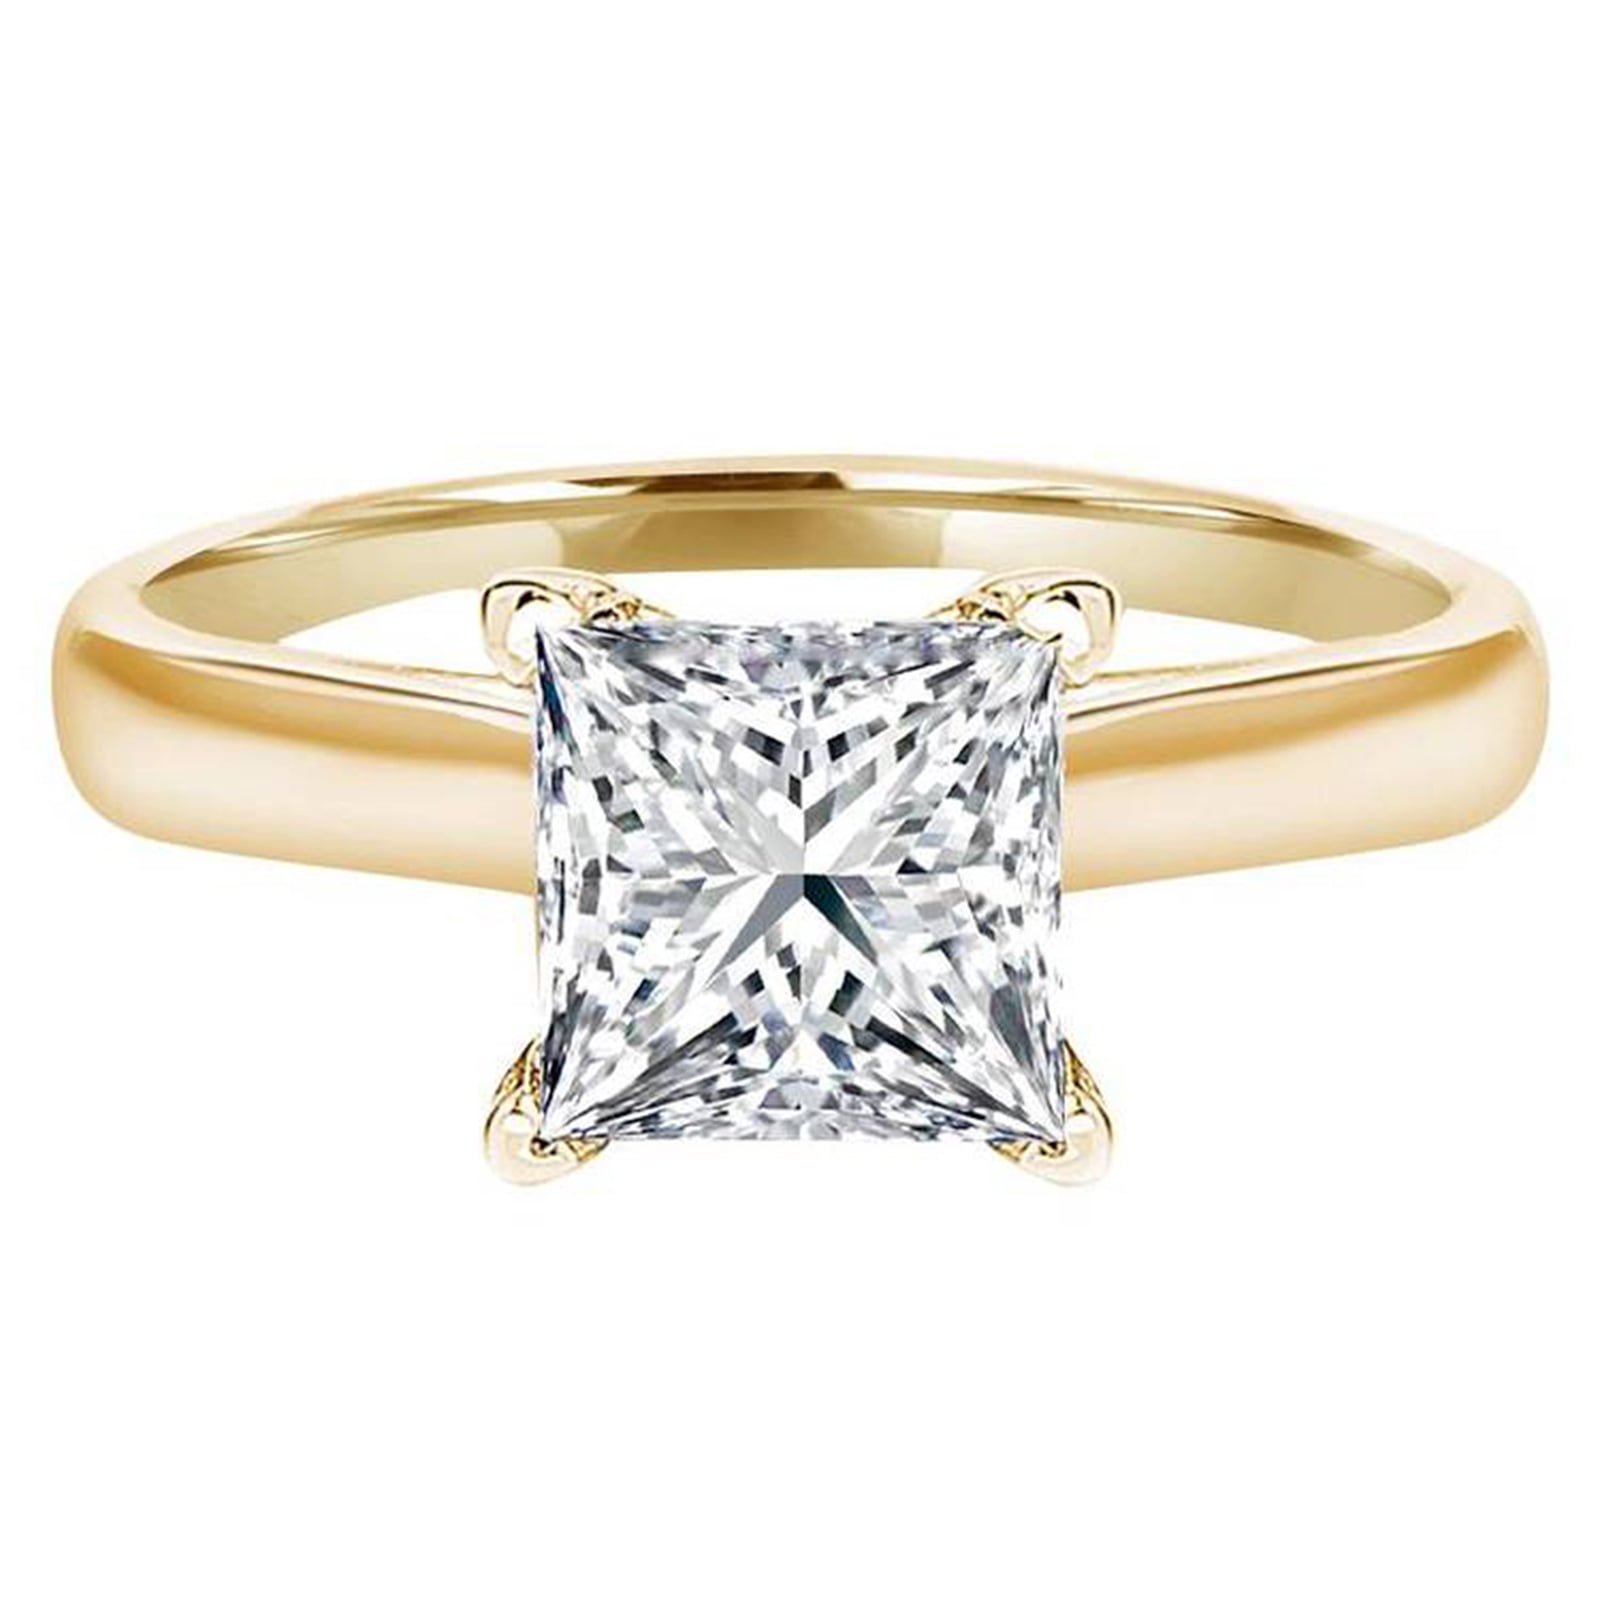 2.10 CT Princess D VVS1 Diamond 14K WHITE GOLD OVER MEN'S WEDDING BAND RING 